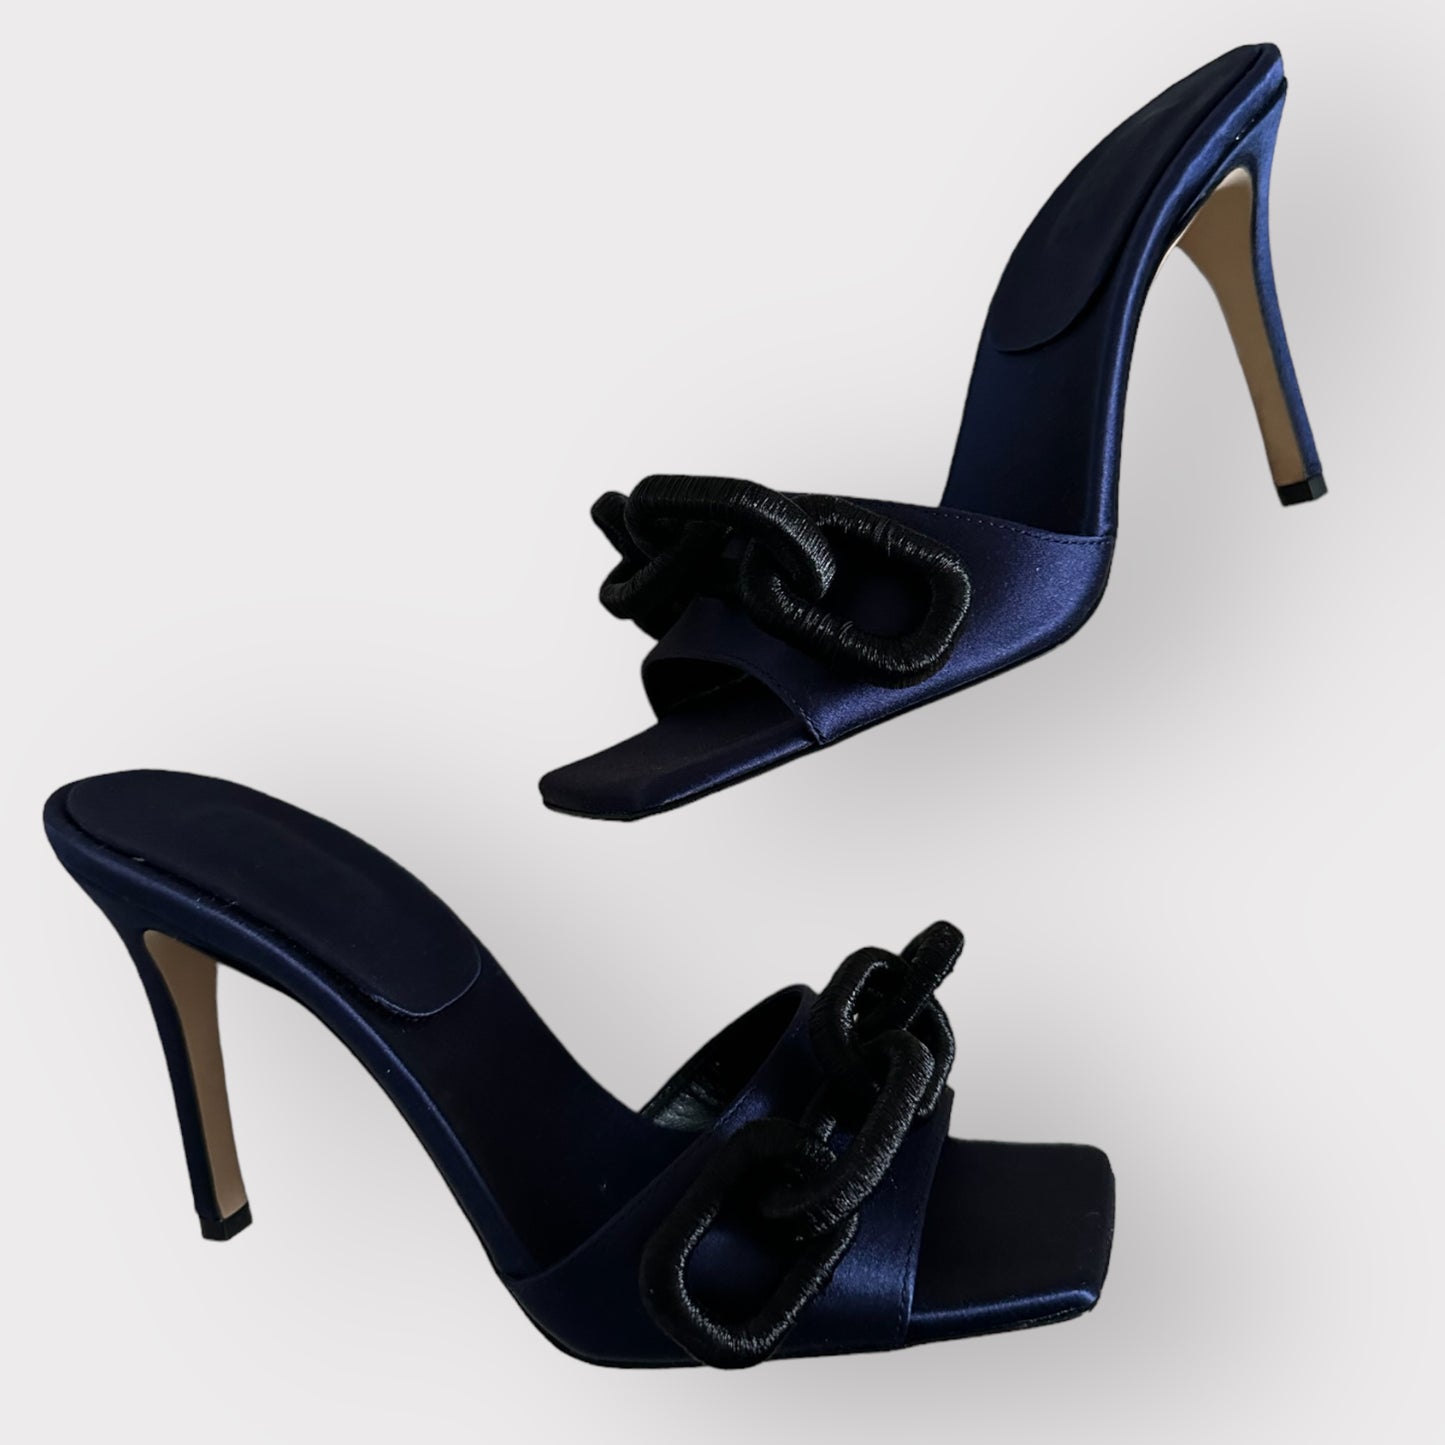 Serena Uziyel @ Net a Porter navy blue black satin mule heels sandals shoes new bnib 37 4